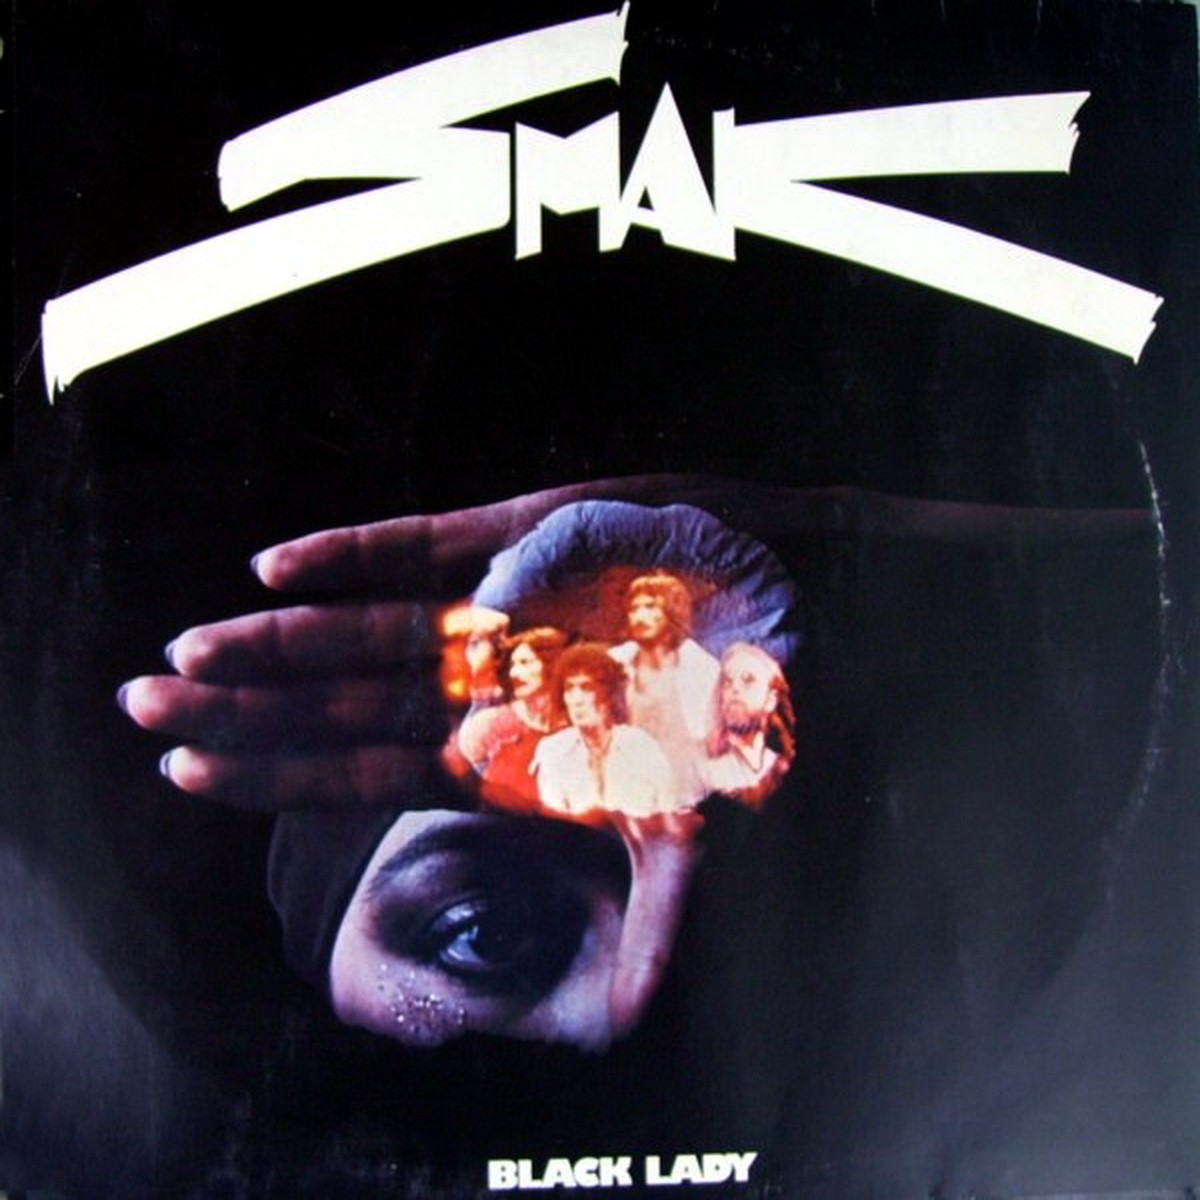 Smak 1978 Black Lady a